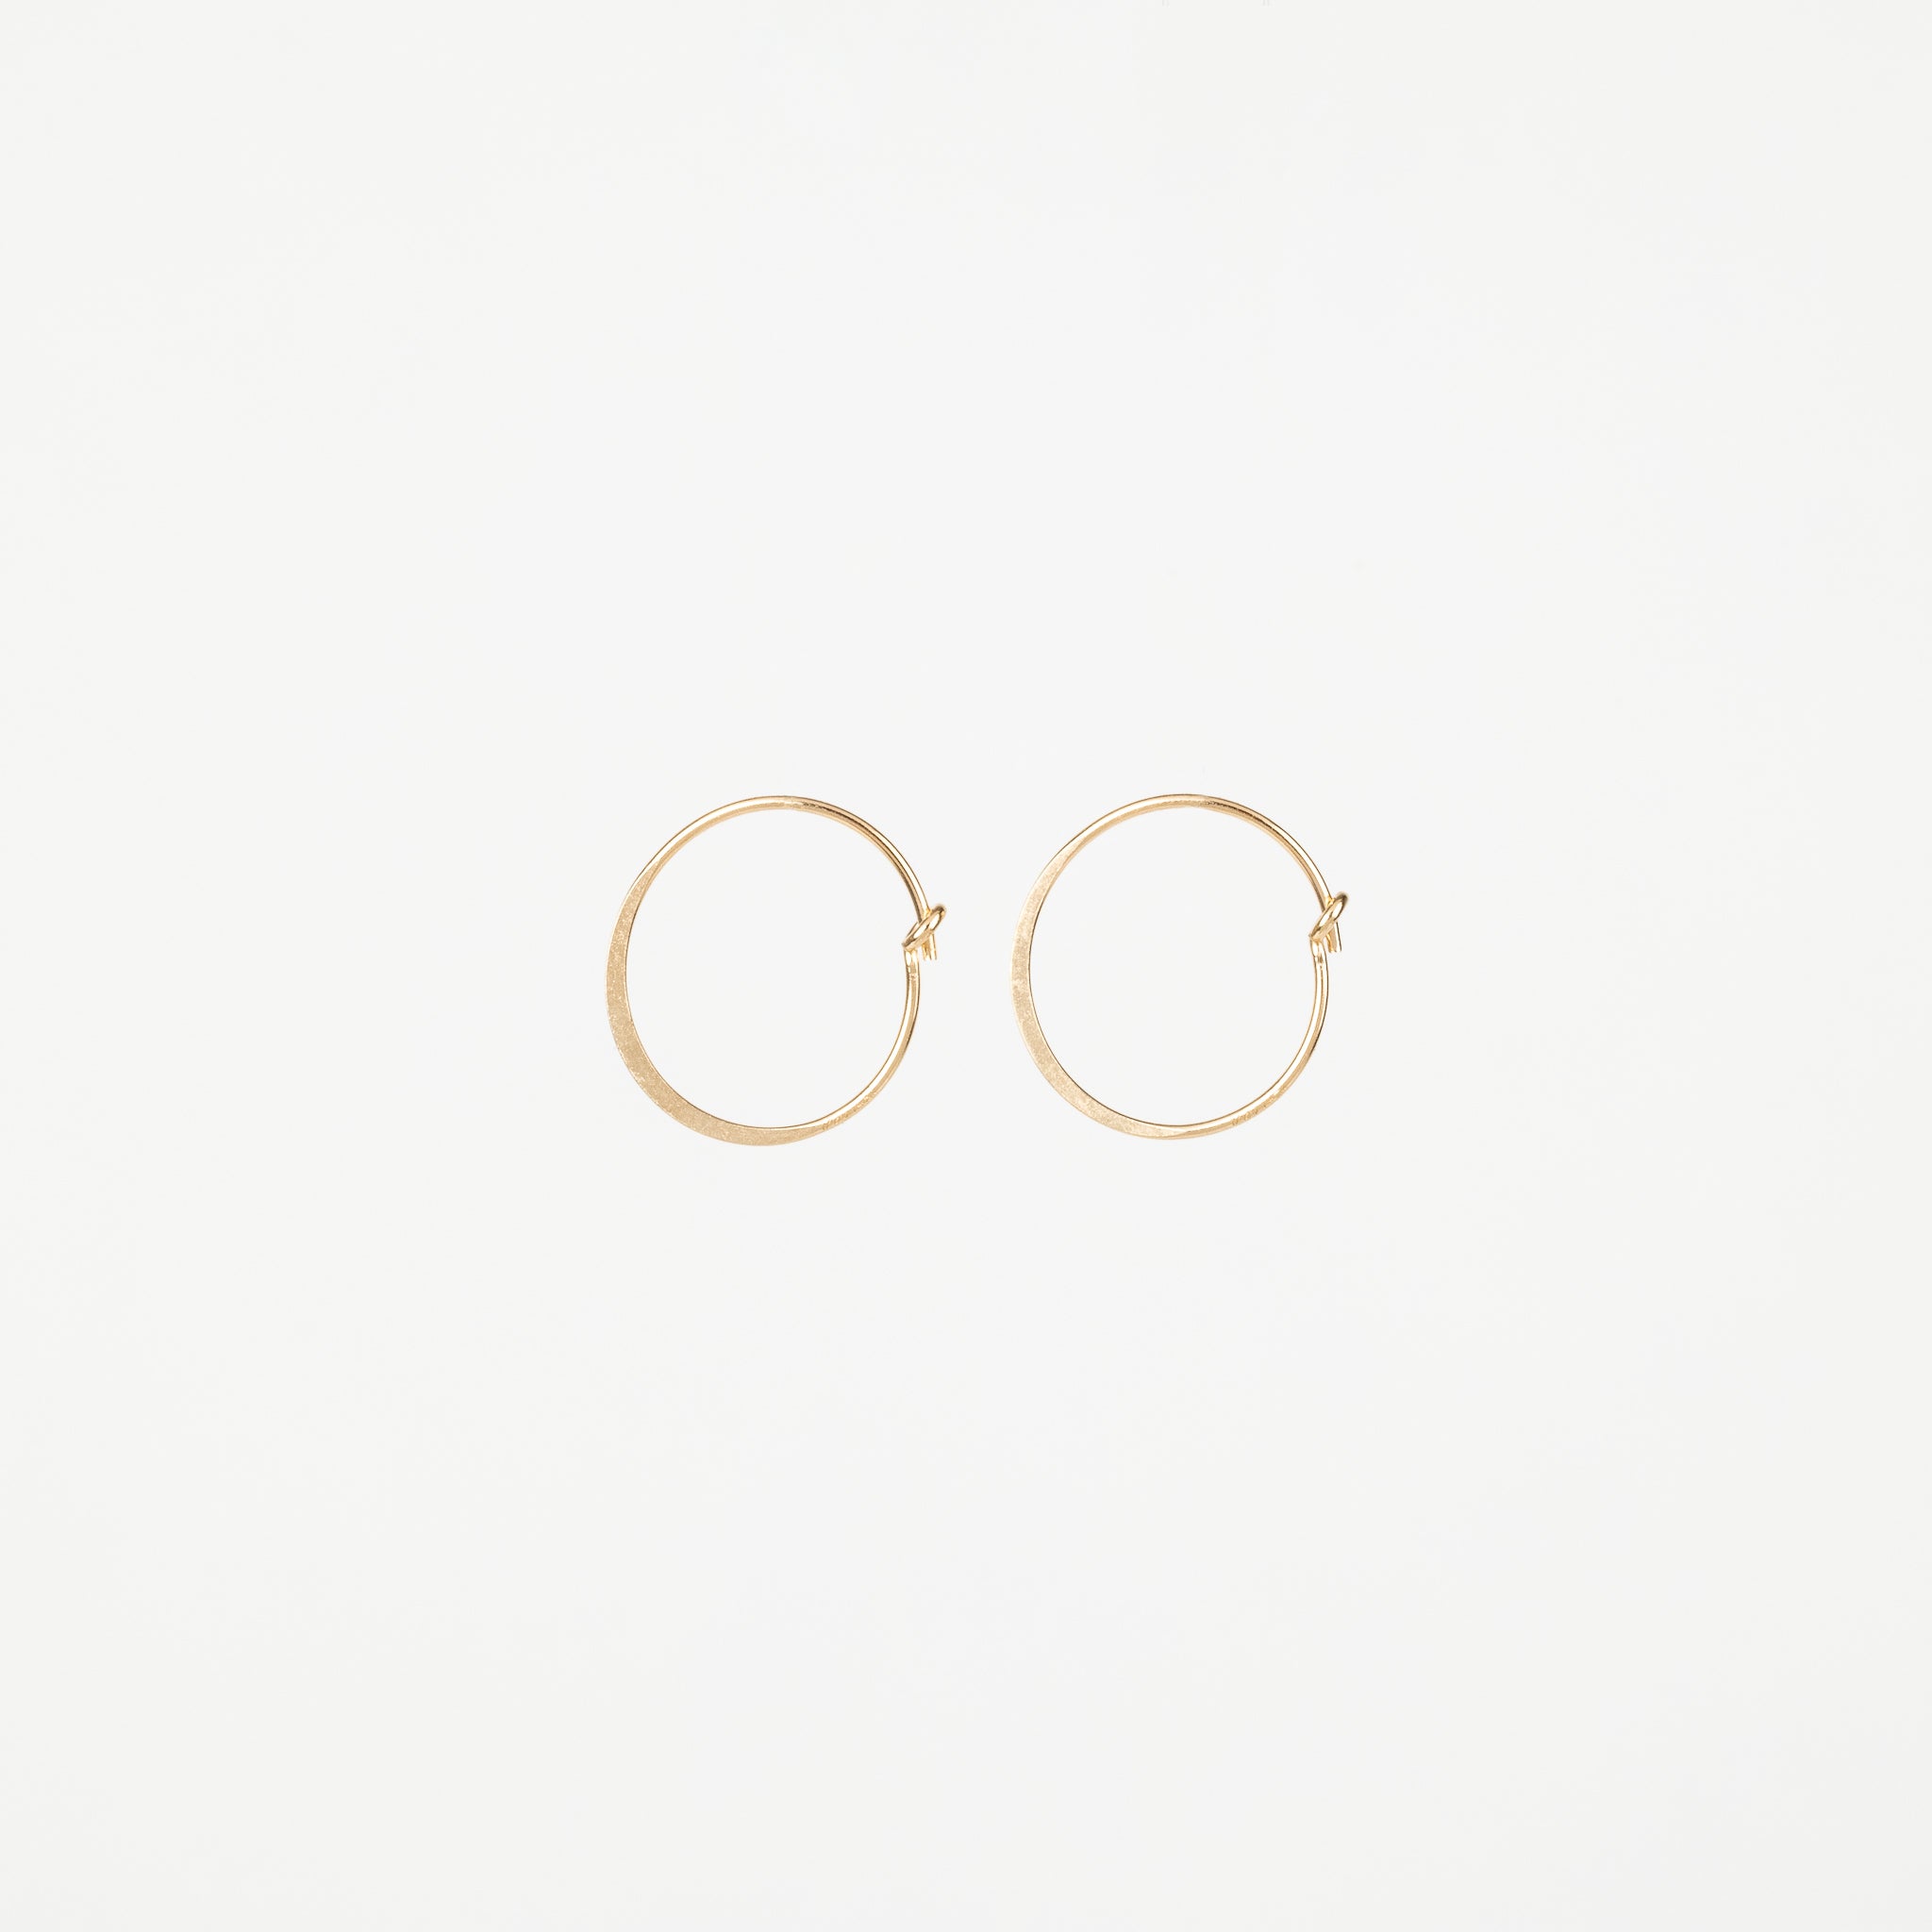 The Tiffany - 15mm Gold Hoop Earrings